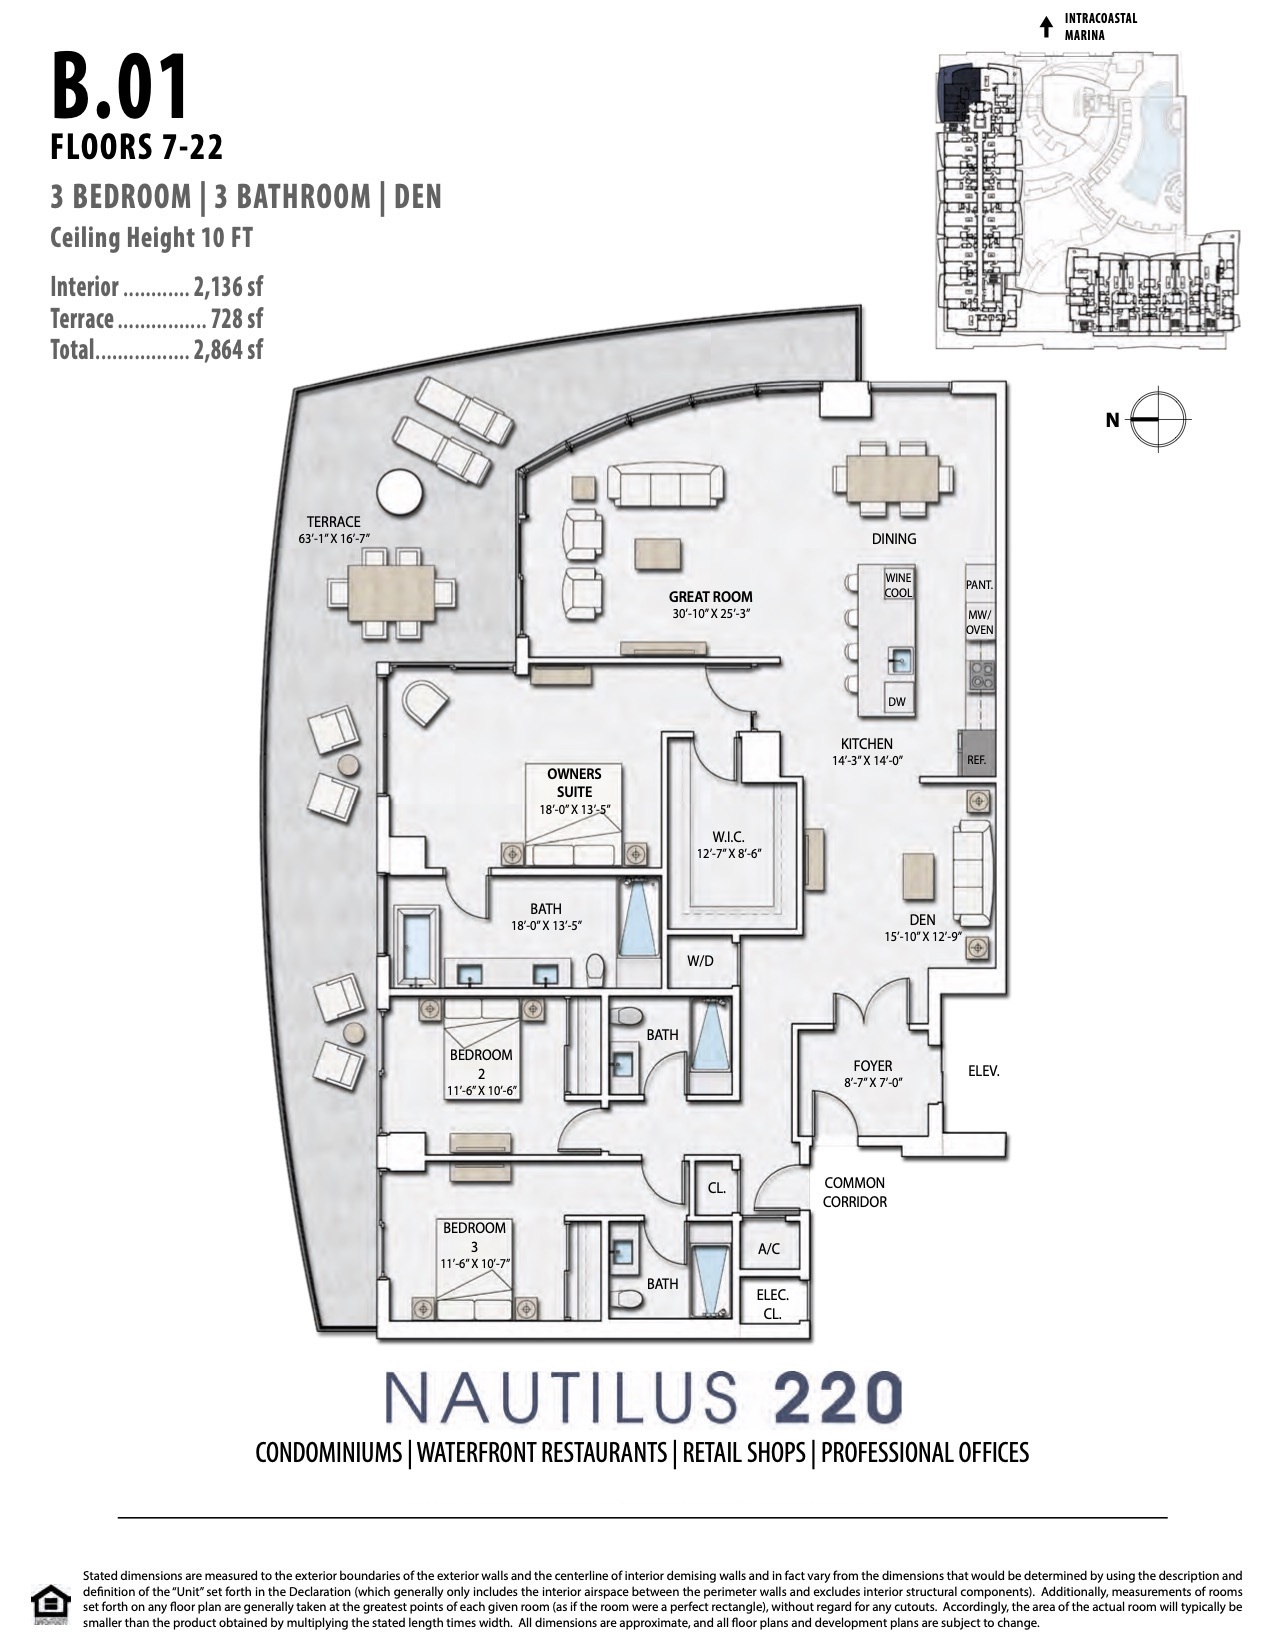 Floor Plan for Nautilus 220 Floorplans, B.01